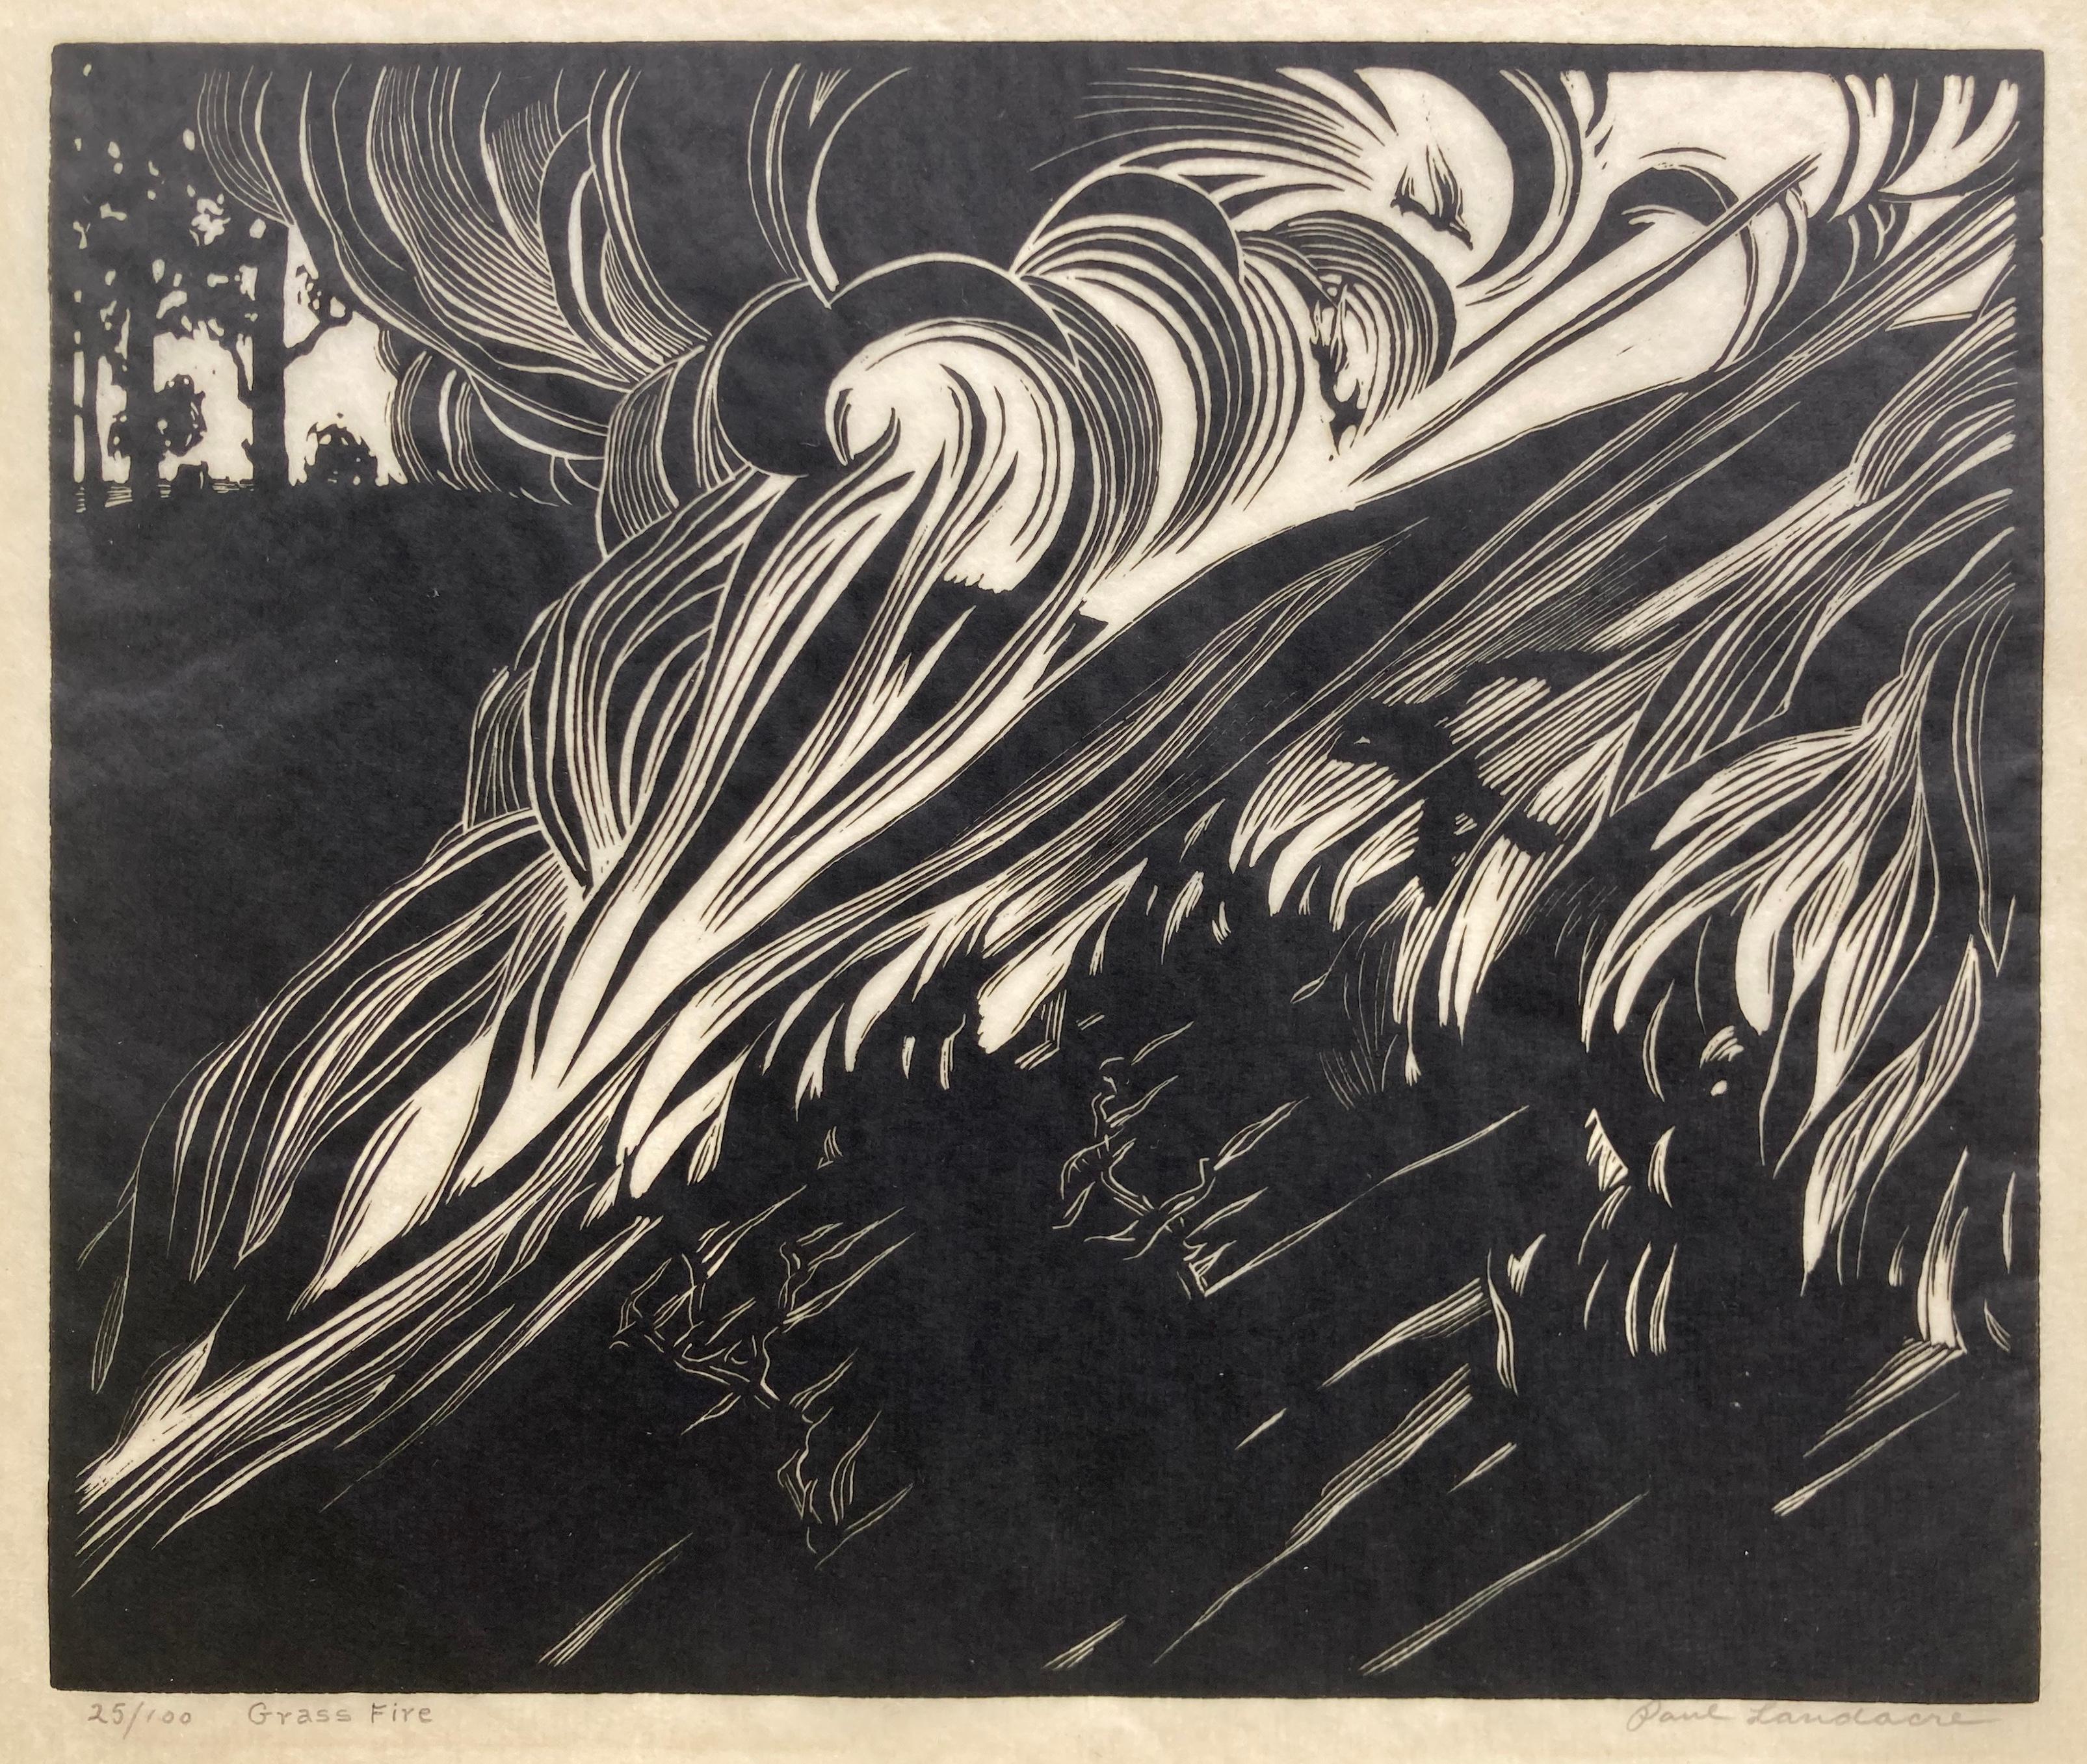 Paul Landacre Landscape Print - GRASS FIRE. - Very Scarce Early signed Impression